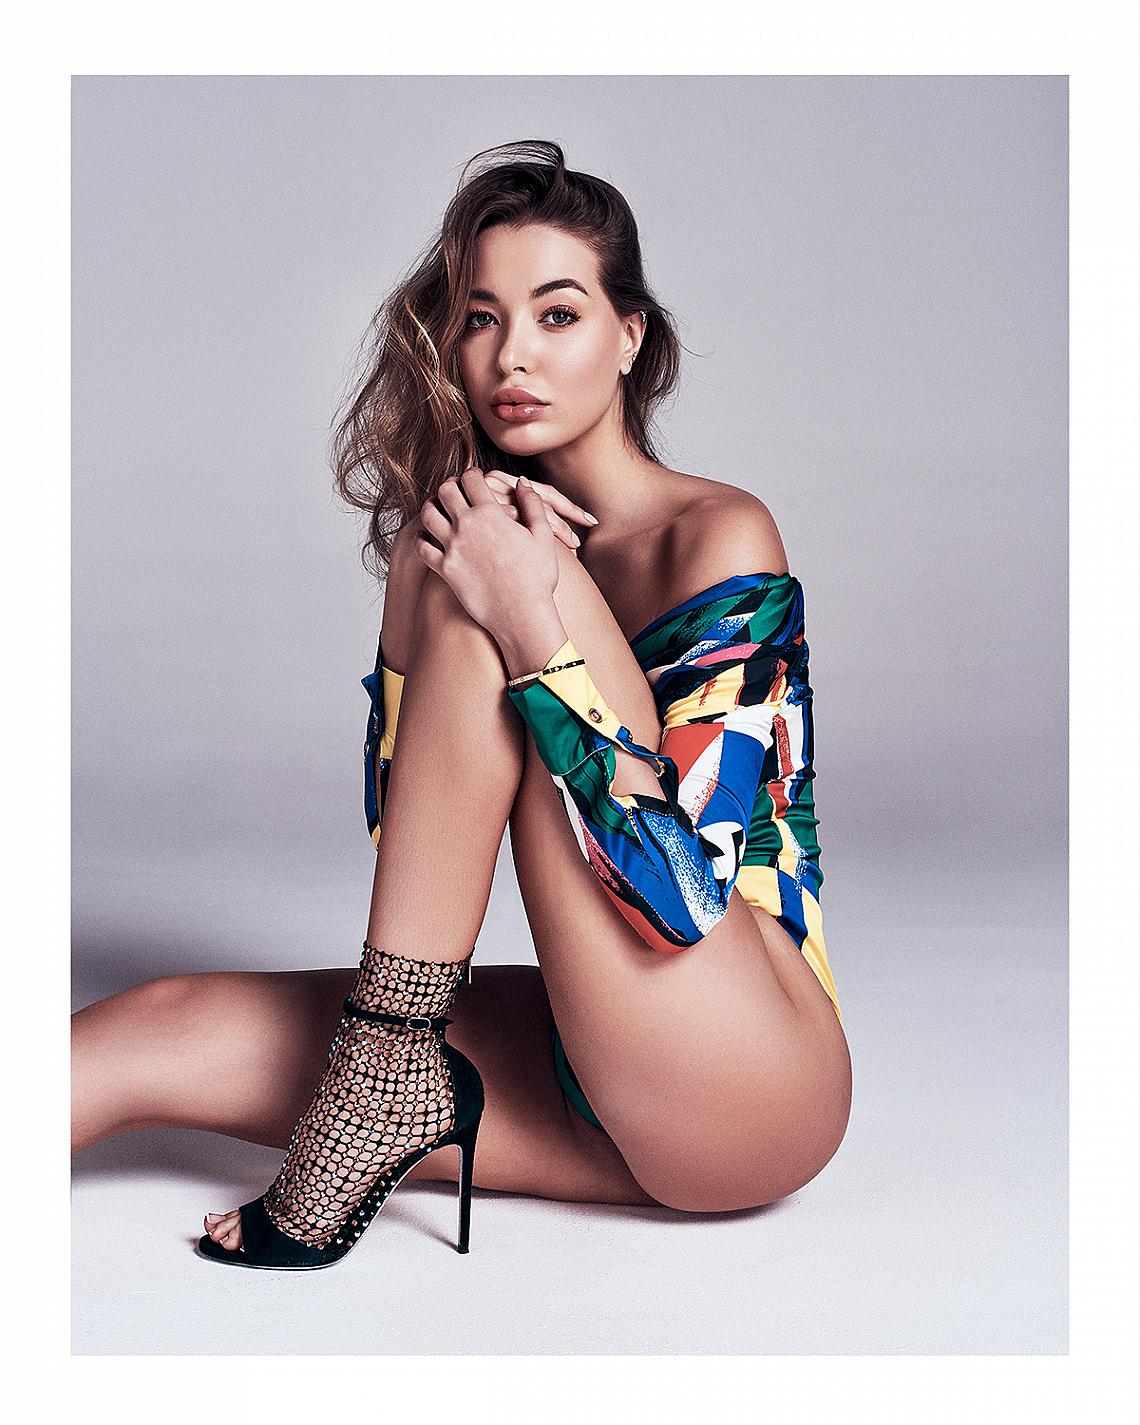 &lt;p&gt;Топ Versace, сандали Rene Caovilla&lt;/p&gt;&lt;p&gt;&lt;br&gt;&lt;/p&gt;&lt;p&gt;Фотографии Jeremy Zaessinger, стайлинг Nataline Mattar, модел Alicia Faubel&lt;/p&gt;